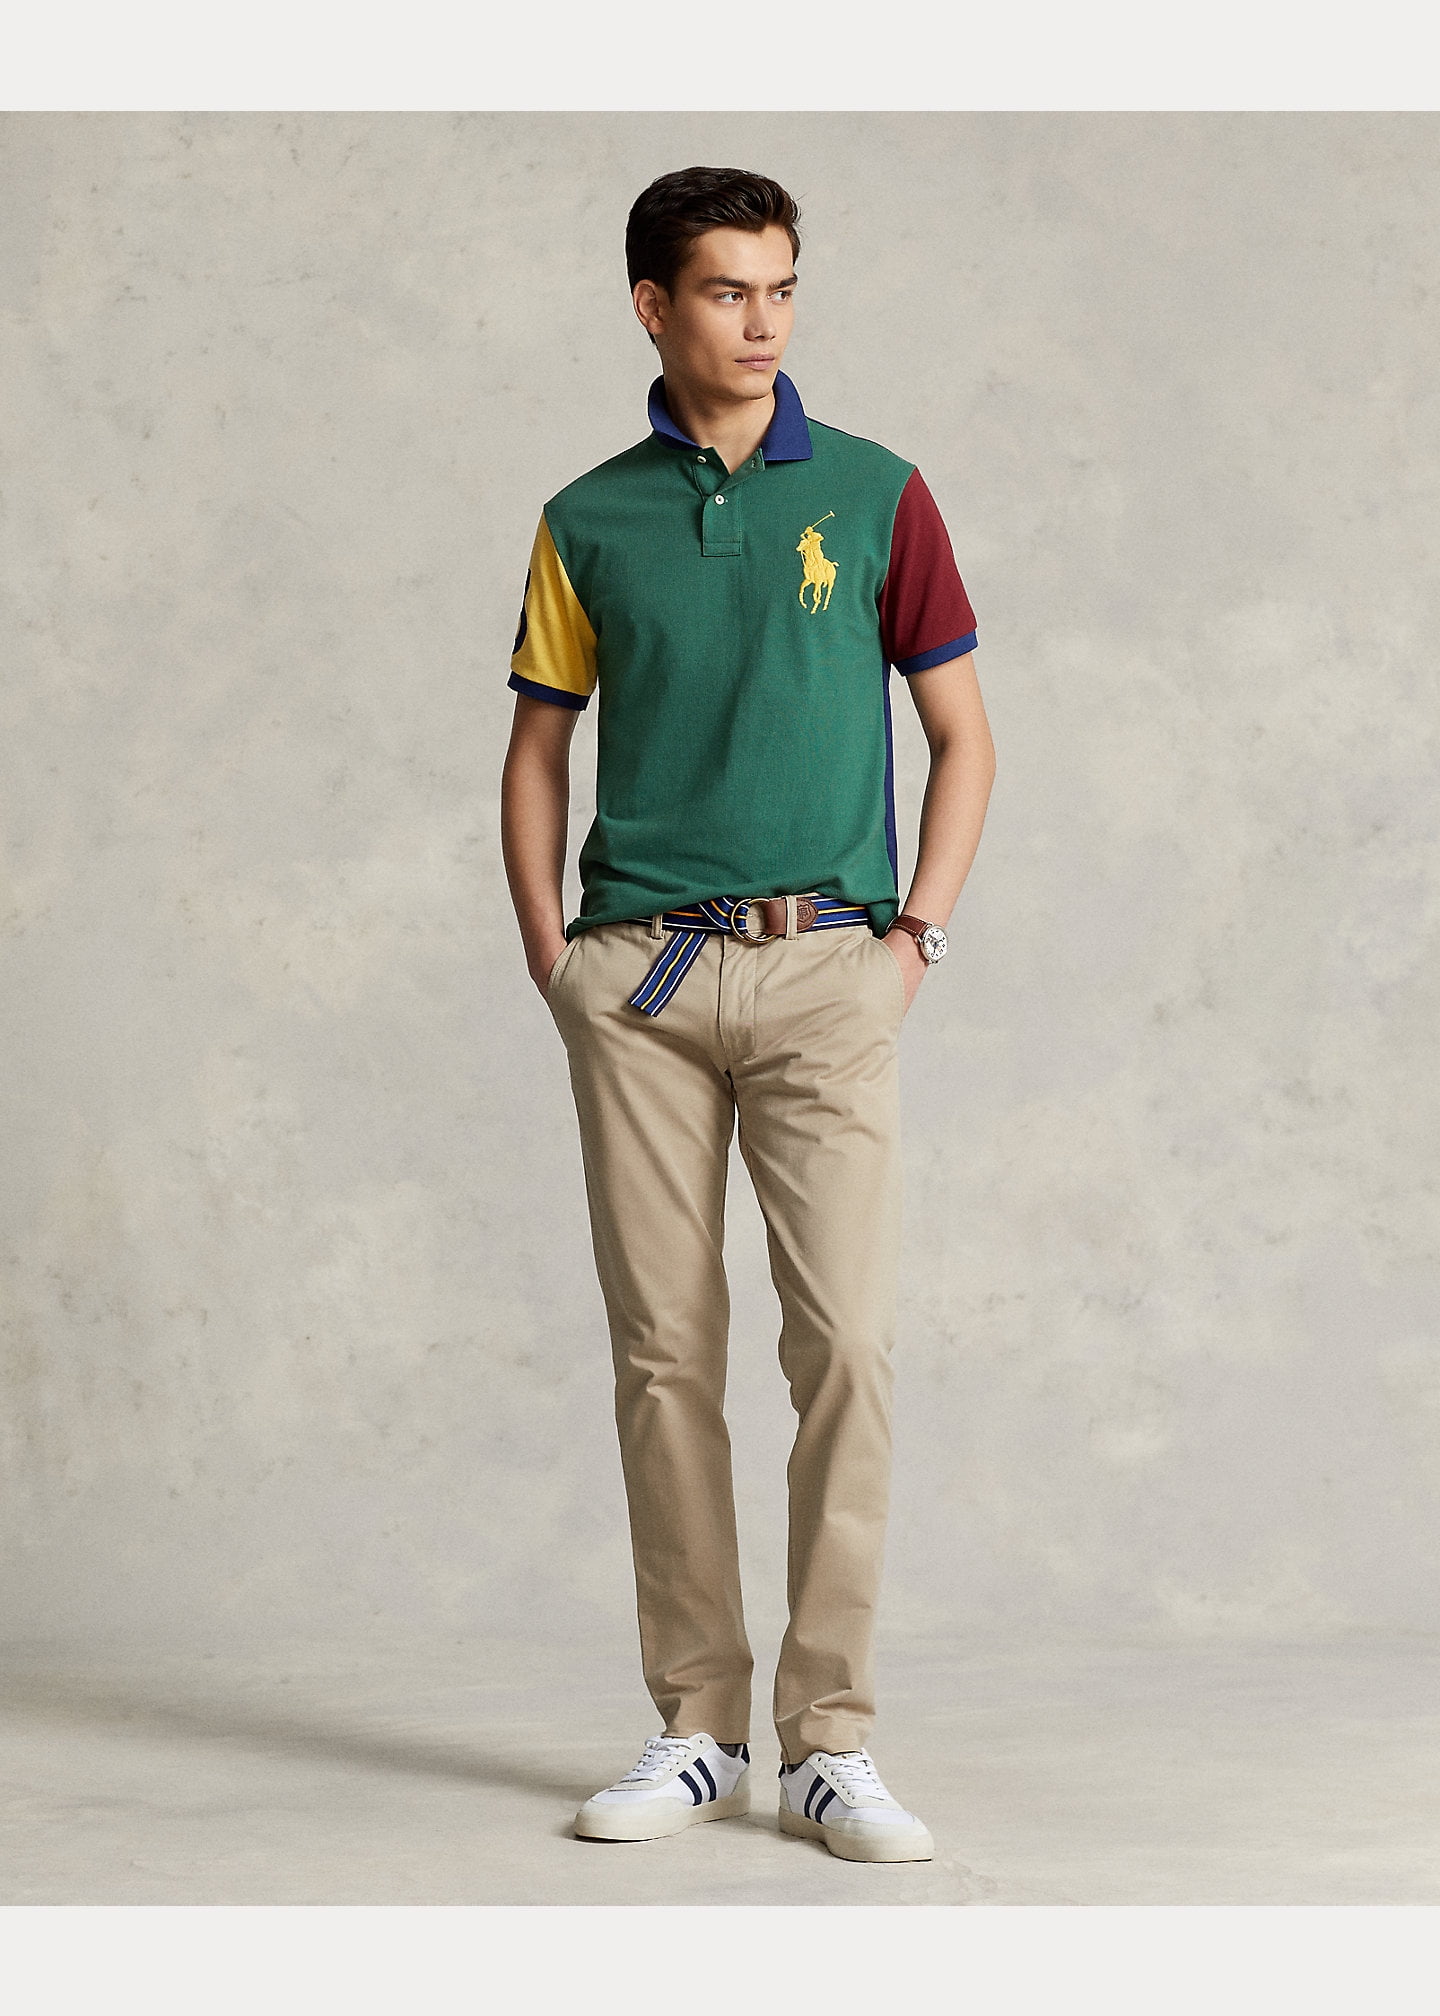 Polo Ralph Lauren Custom Slim-Fit Big Pony Mesh Short-Sleeve Polo Shirt